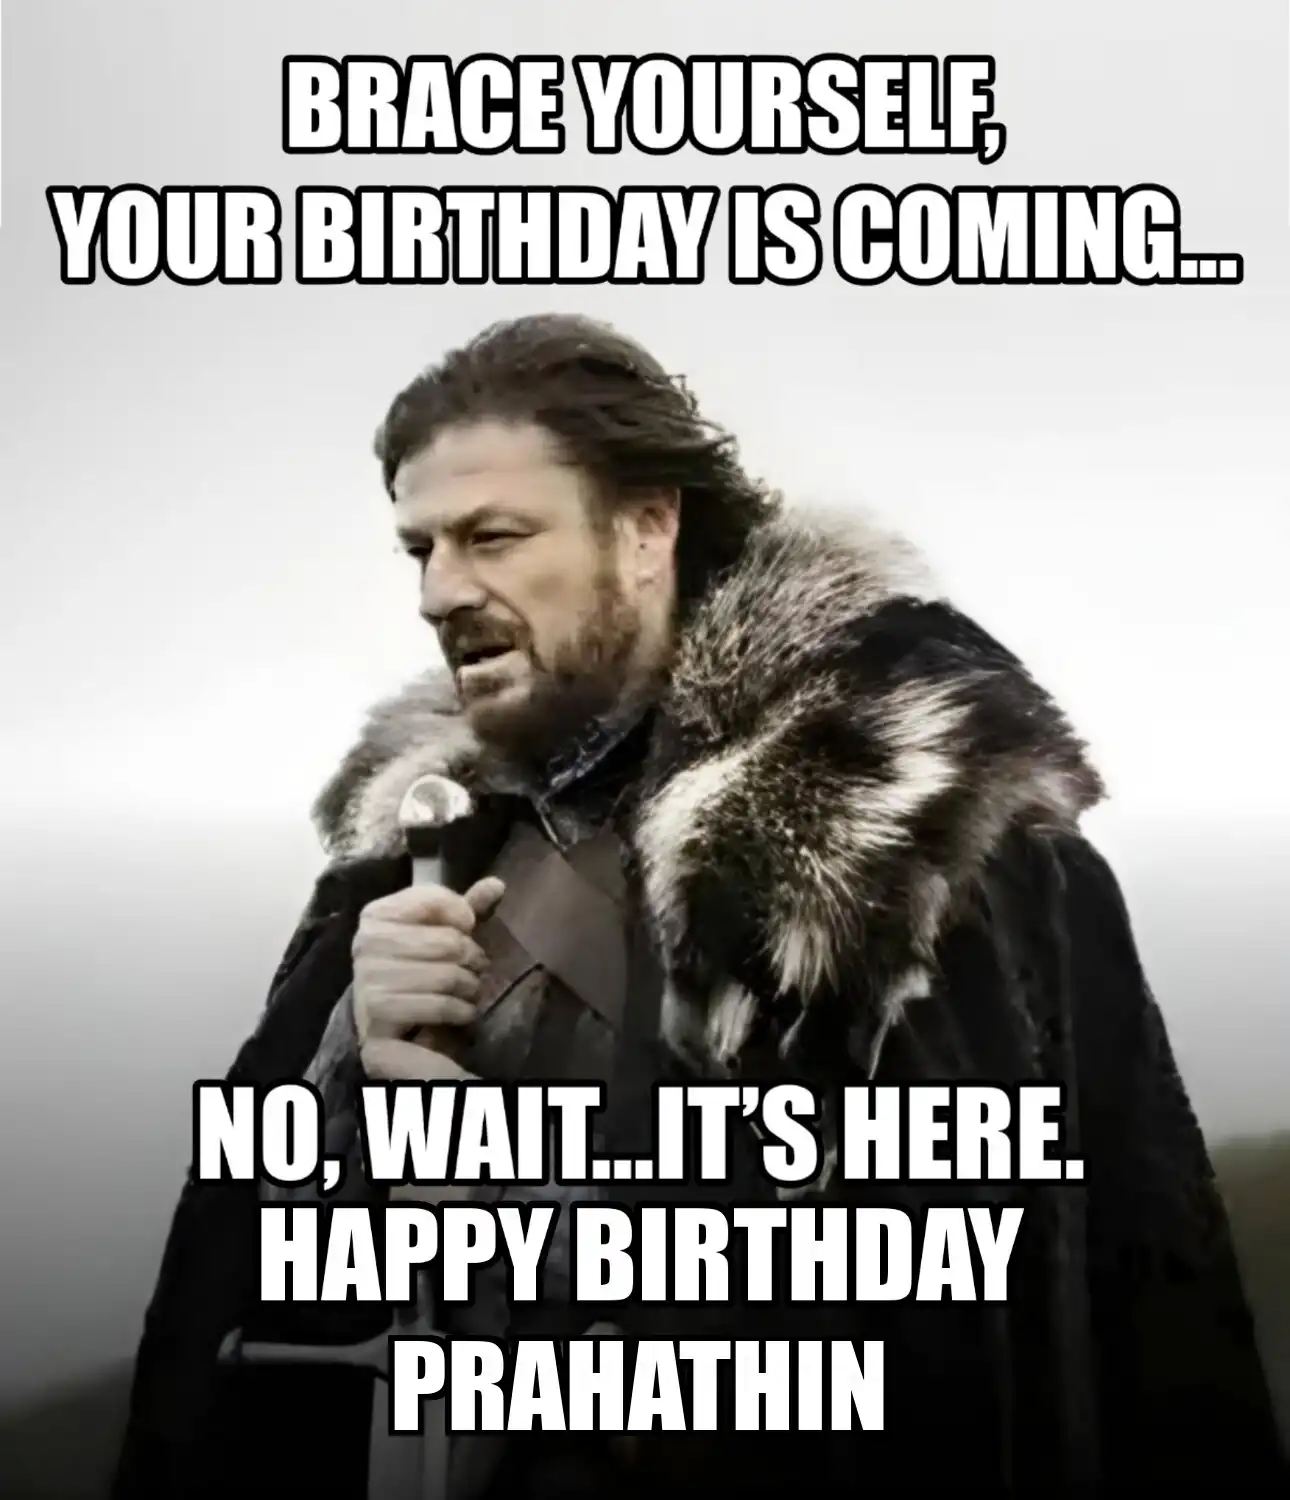 Happy Birthday Prahathin Brace Yourself Your Birthday Is Coming Meme